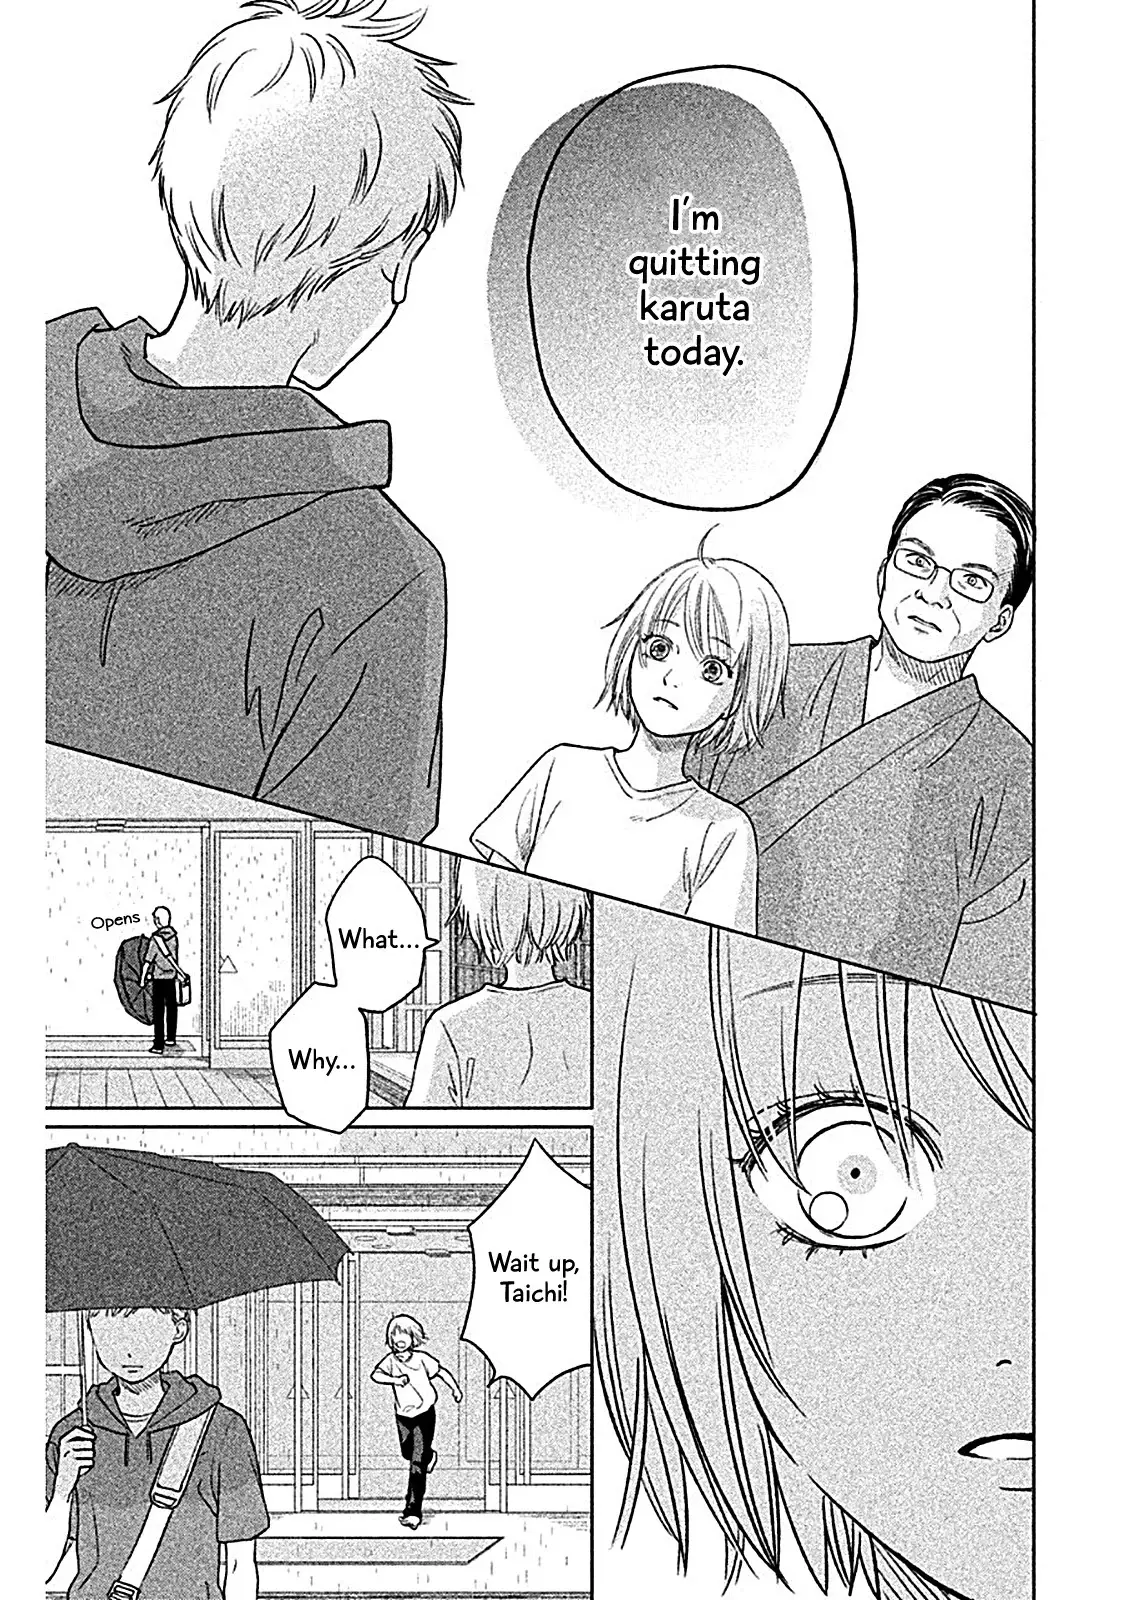 Chihayafuru: Middle School Arc - 1 page 32